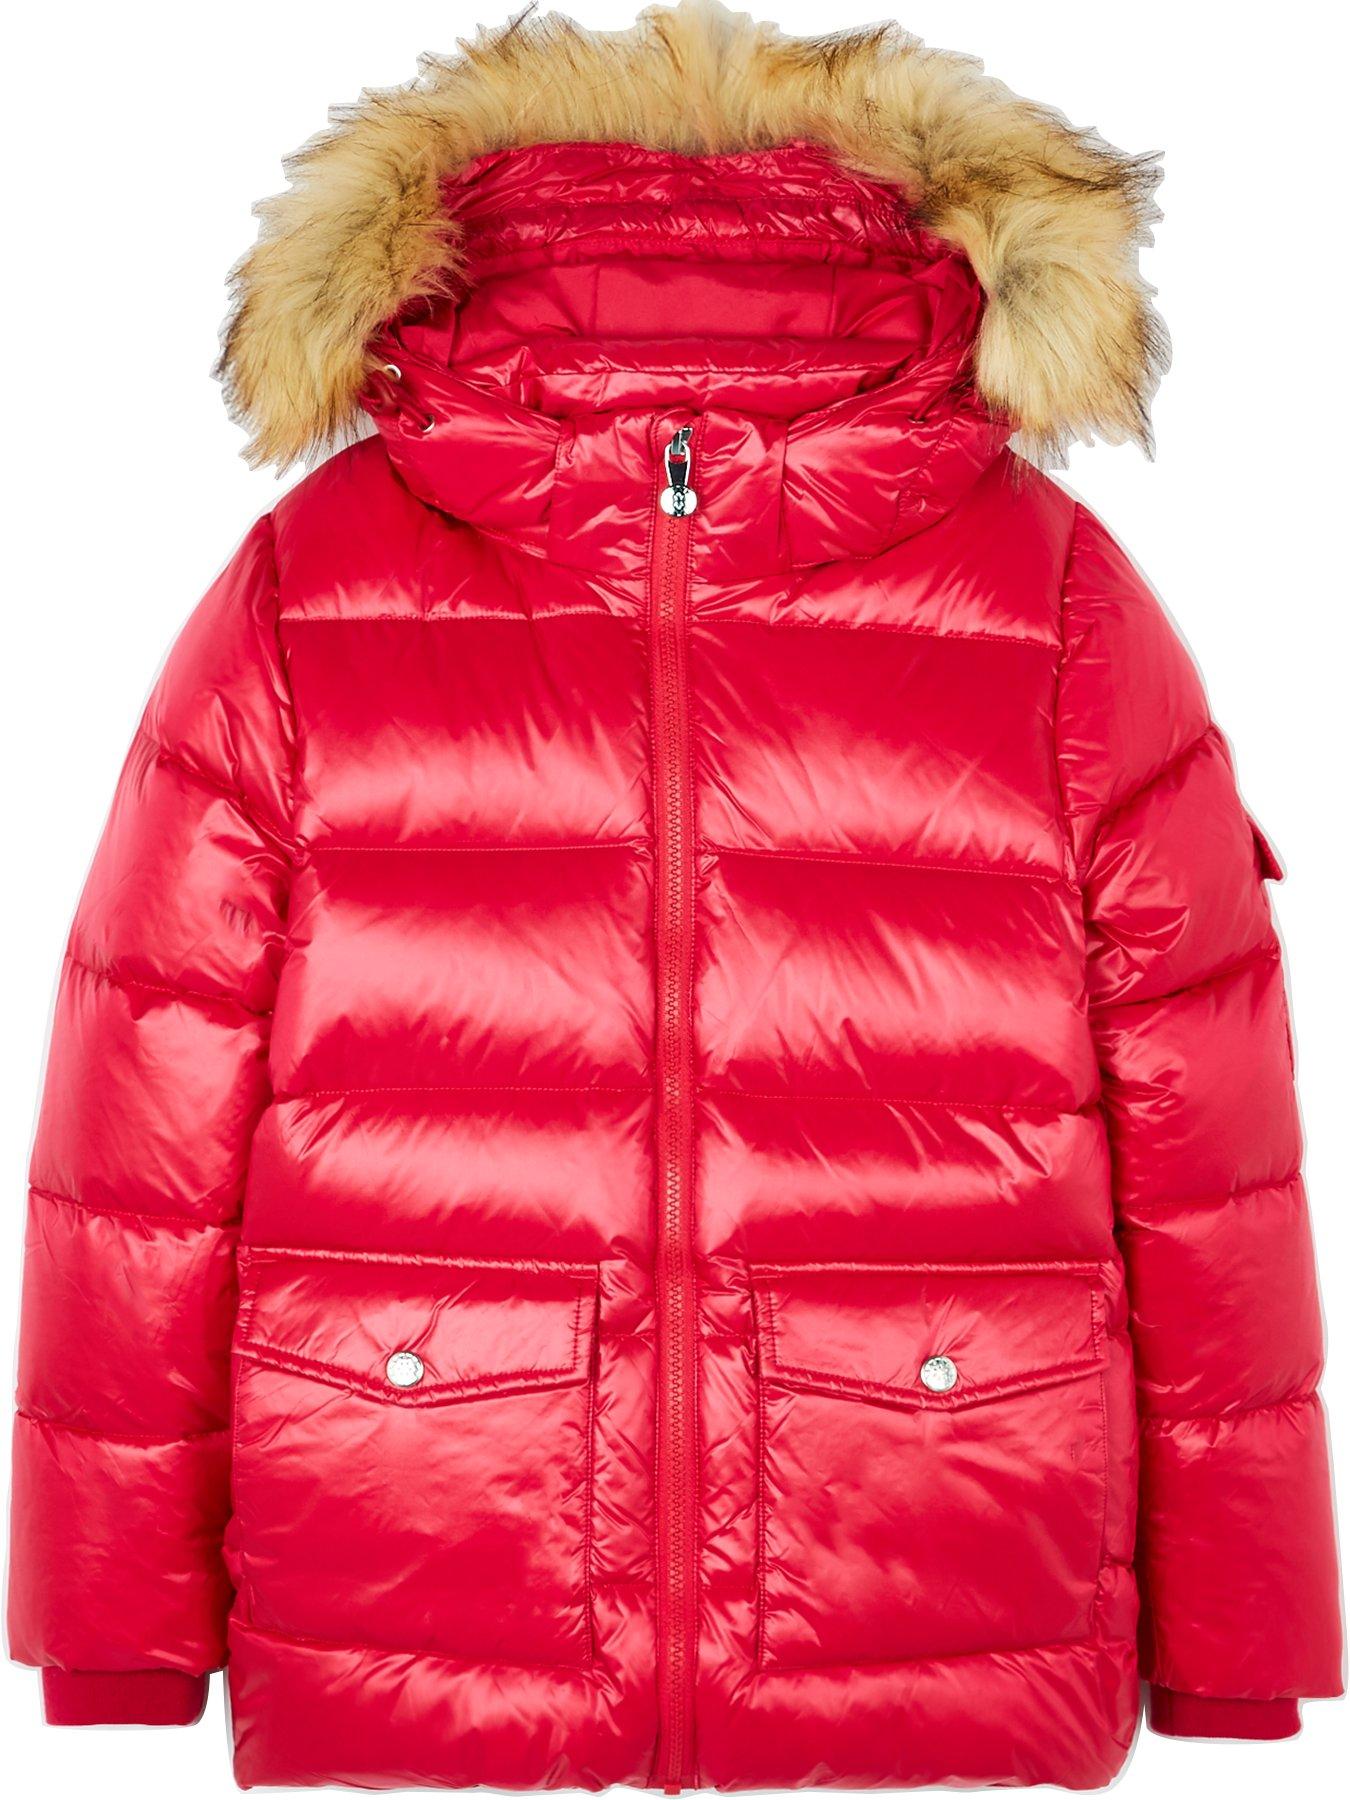 Pyrenex | Coats & jackets | Girls clothes | Designer brands | www.very ...